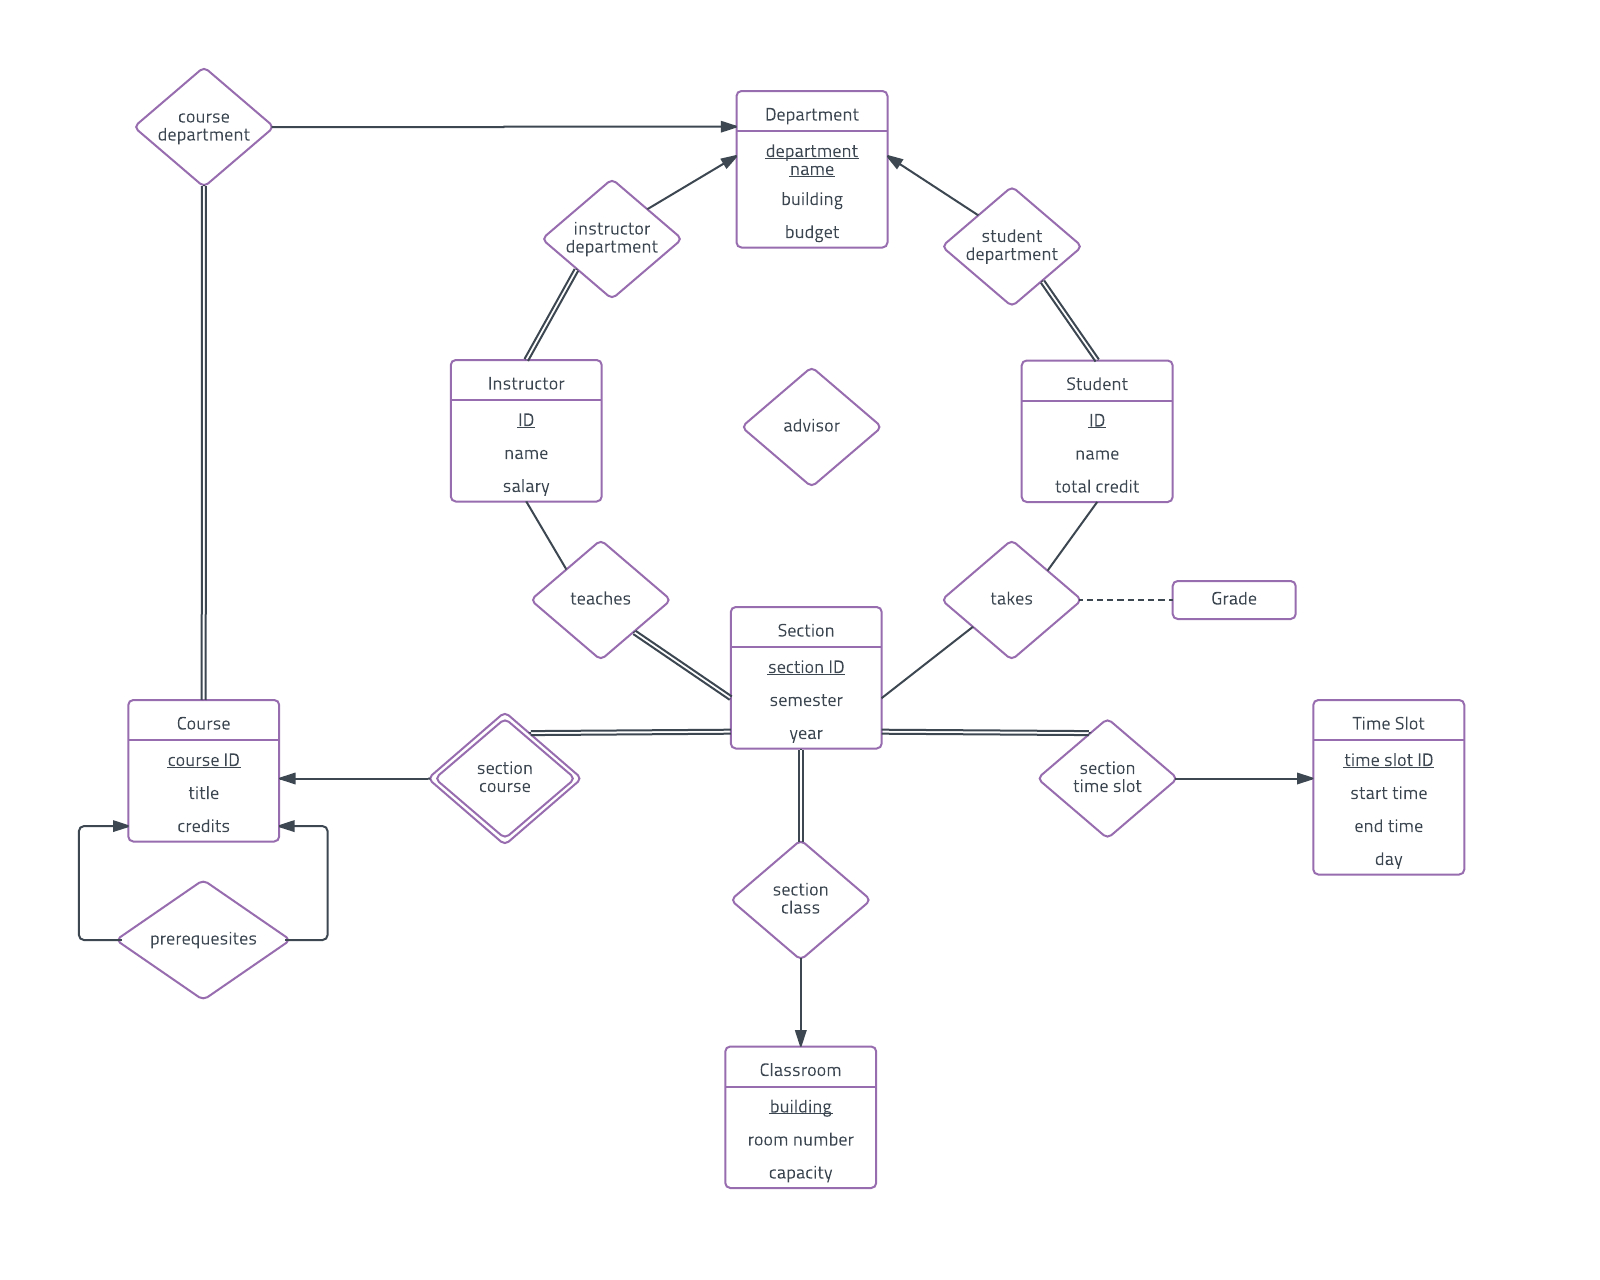 Er Diagram Examples And Templates | Lucidchart in Er Diagram University Management System